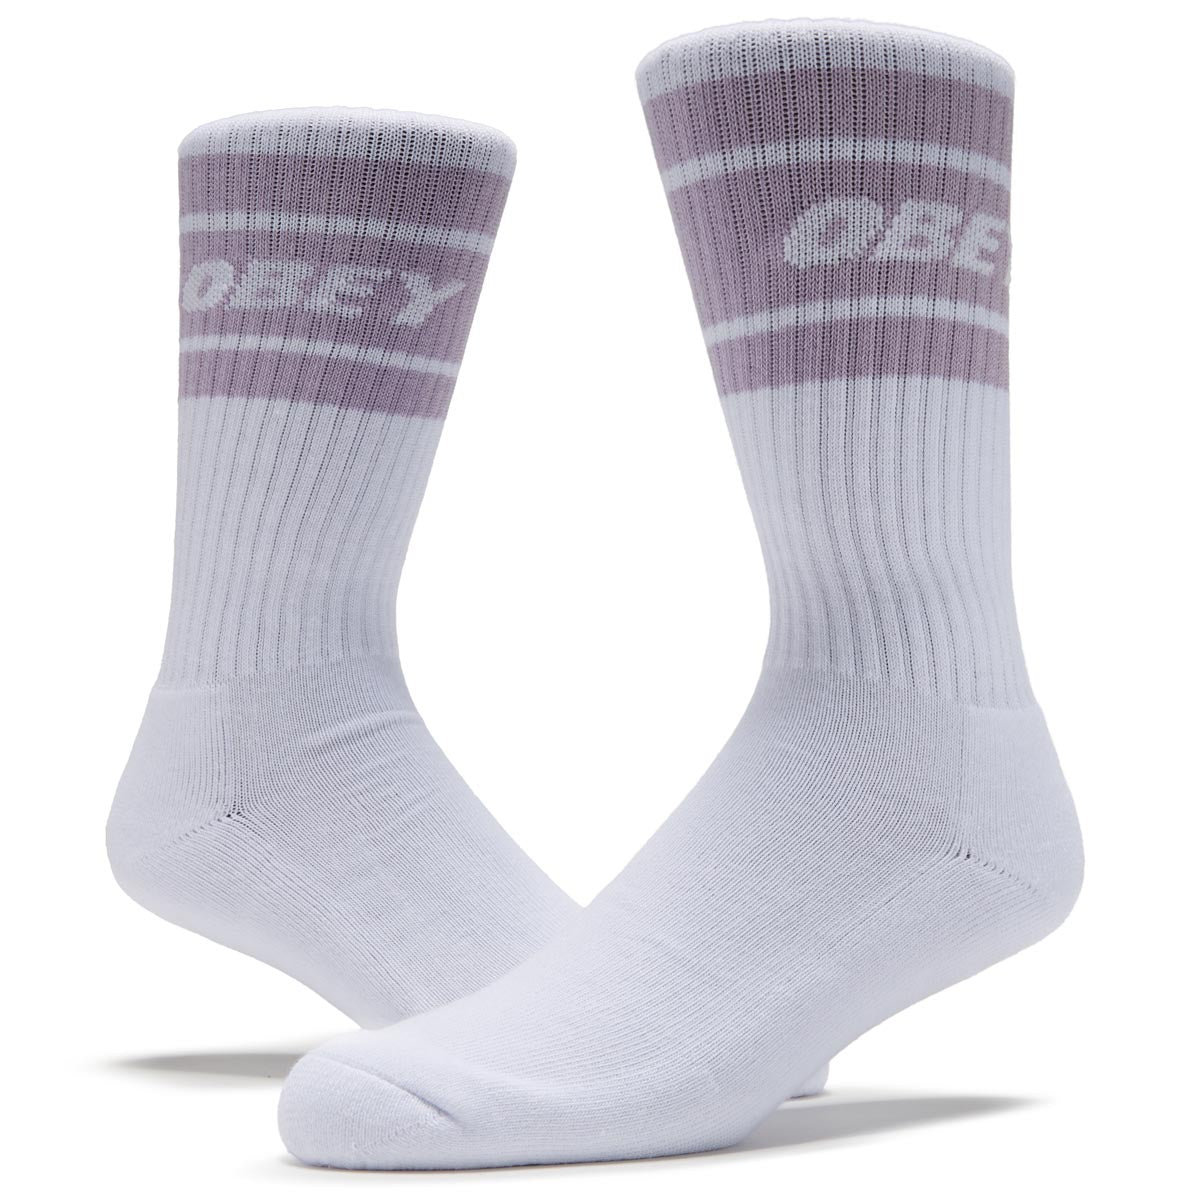 Obey Cooper II Socks - White/Orchid Petal image 2